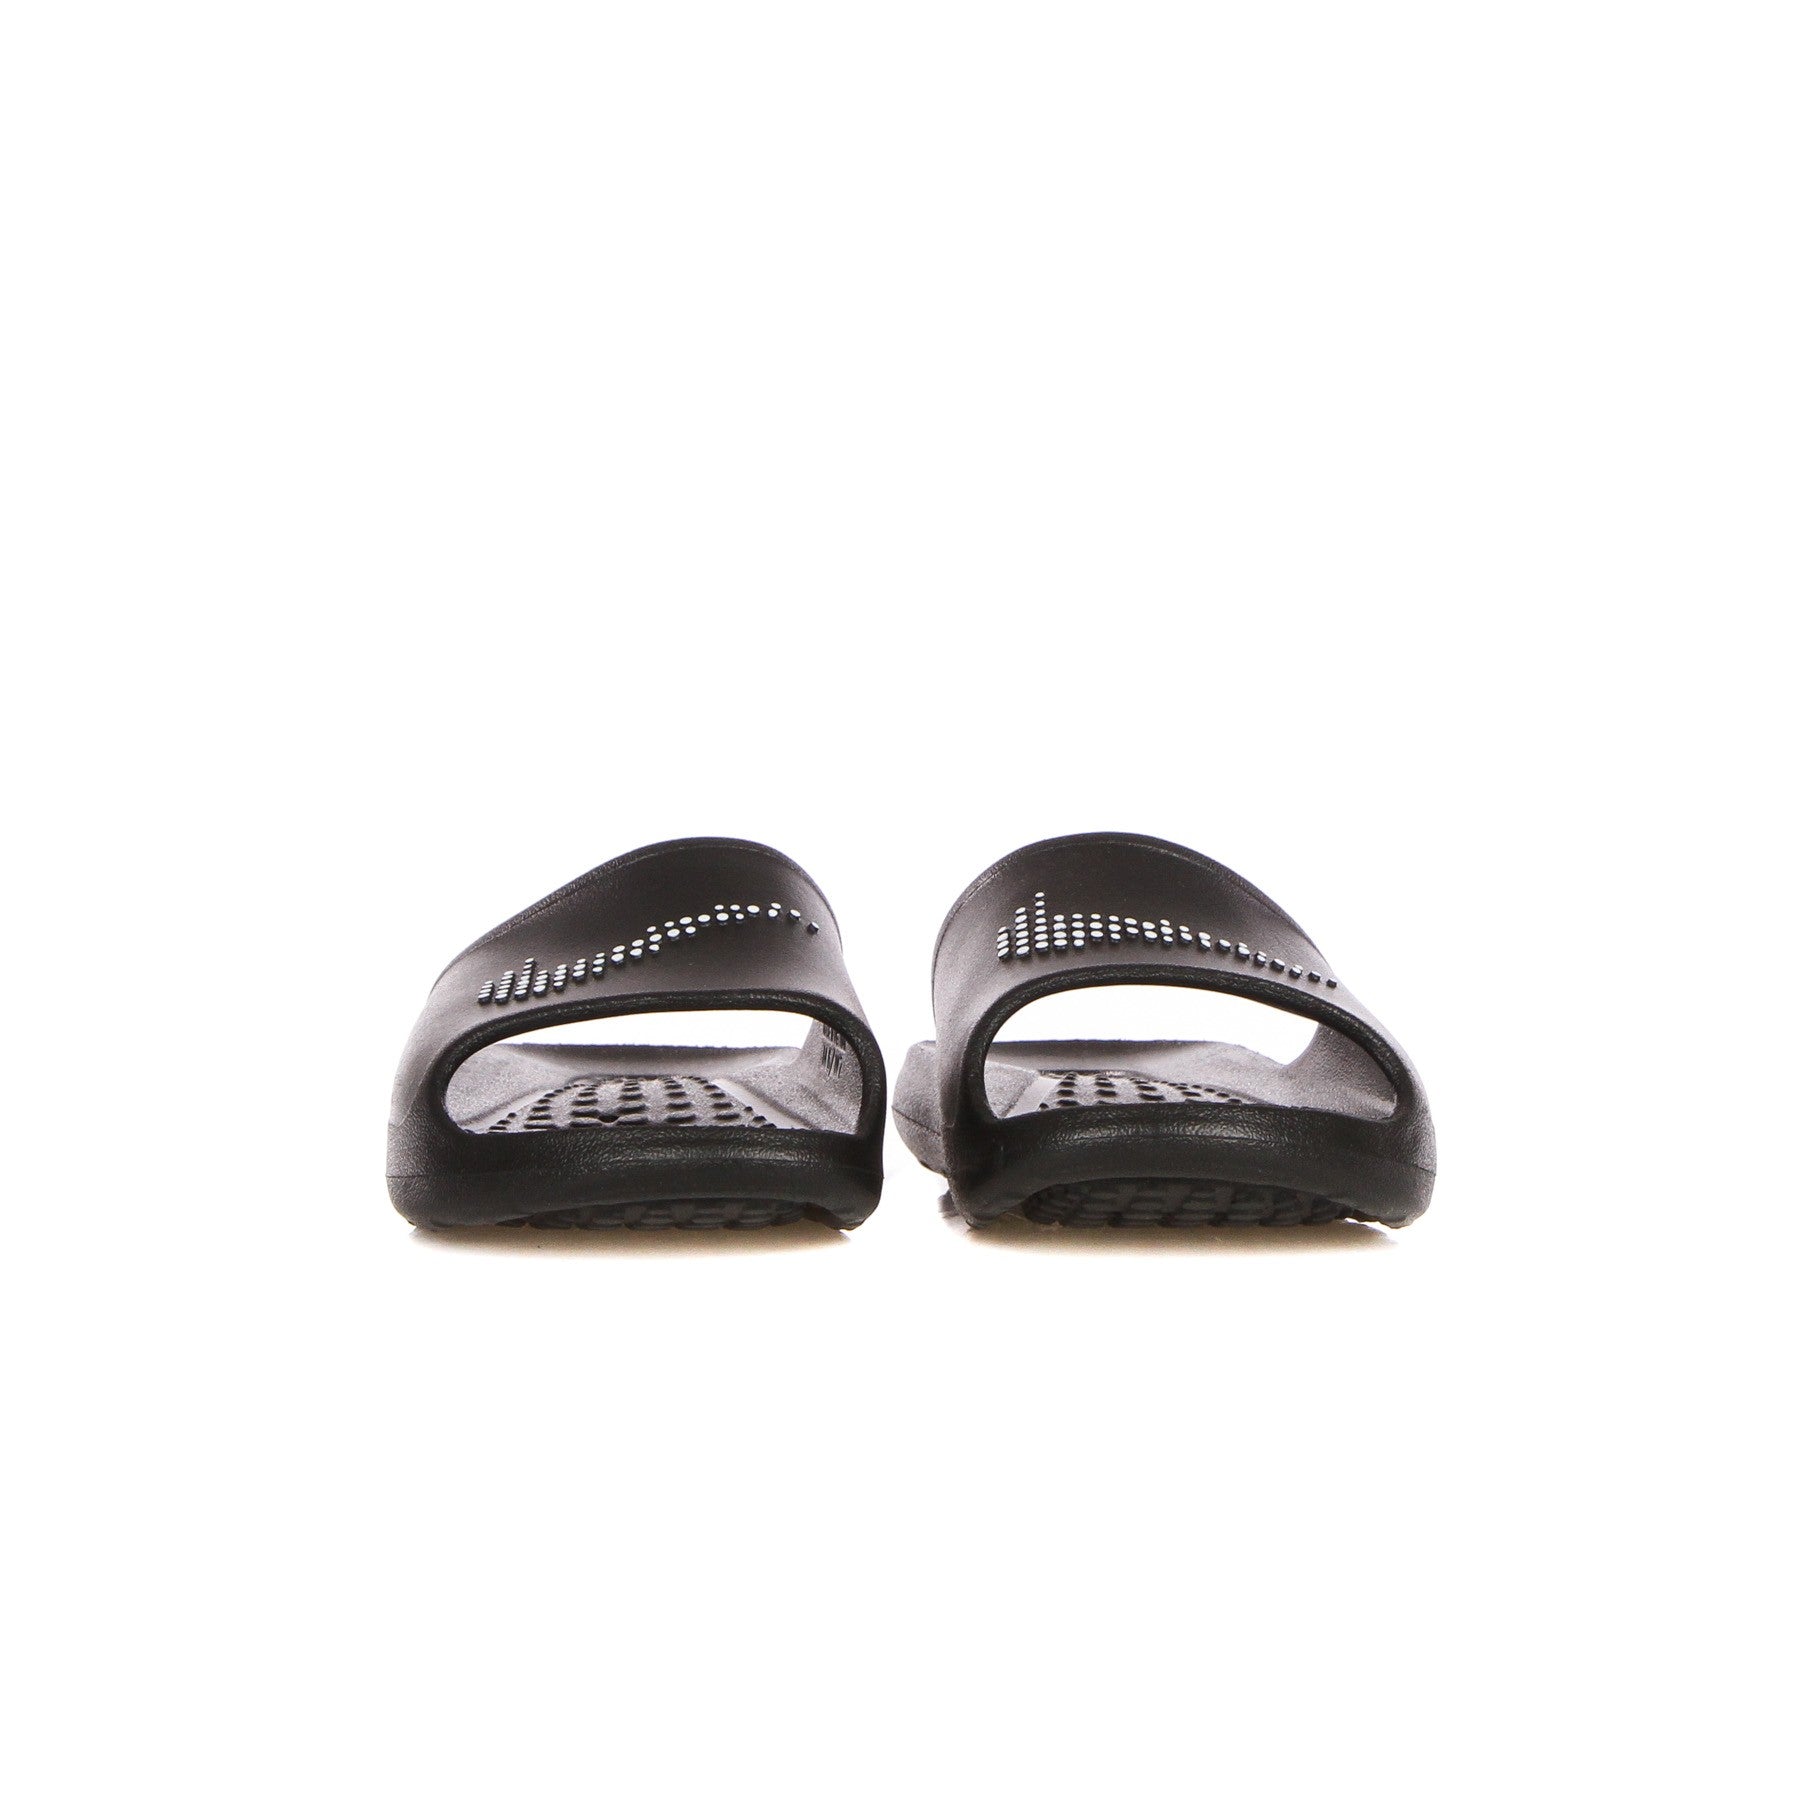 Victori One Slide Men's Slippers Black/white/black